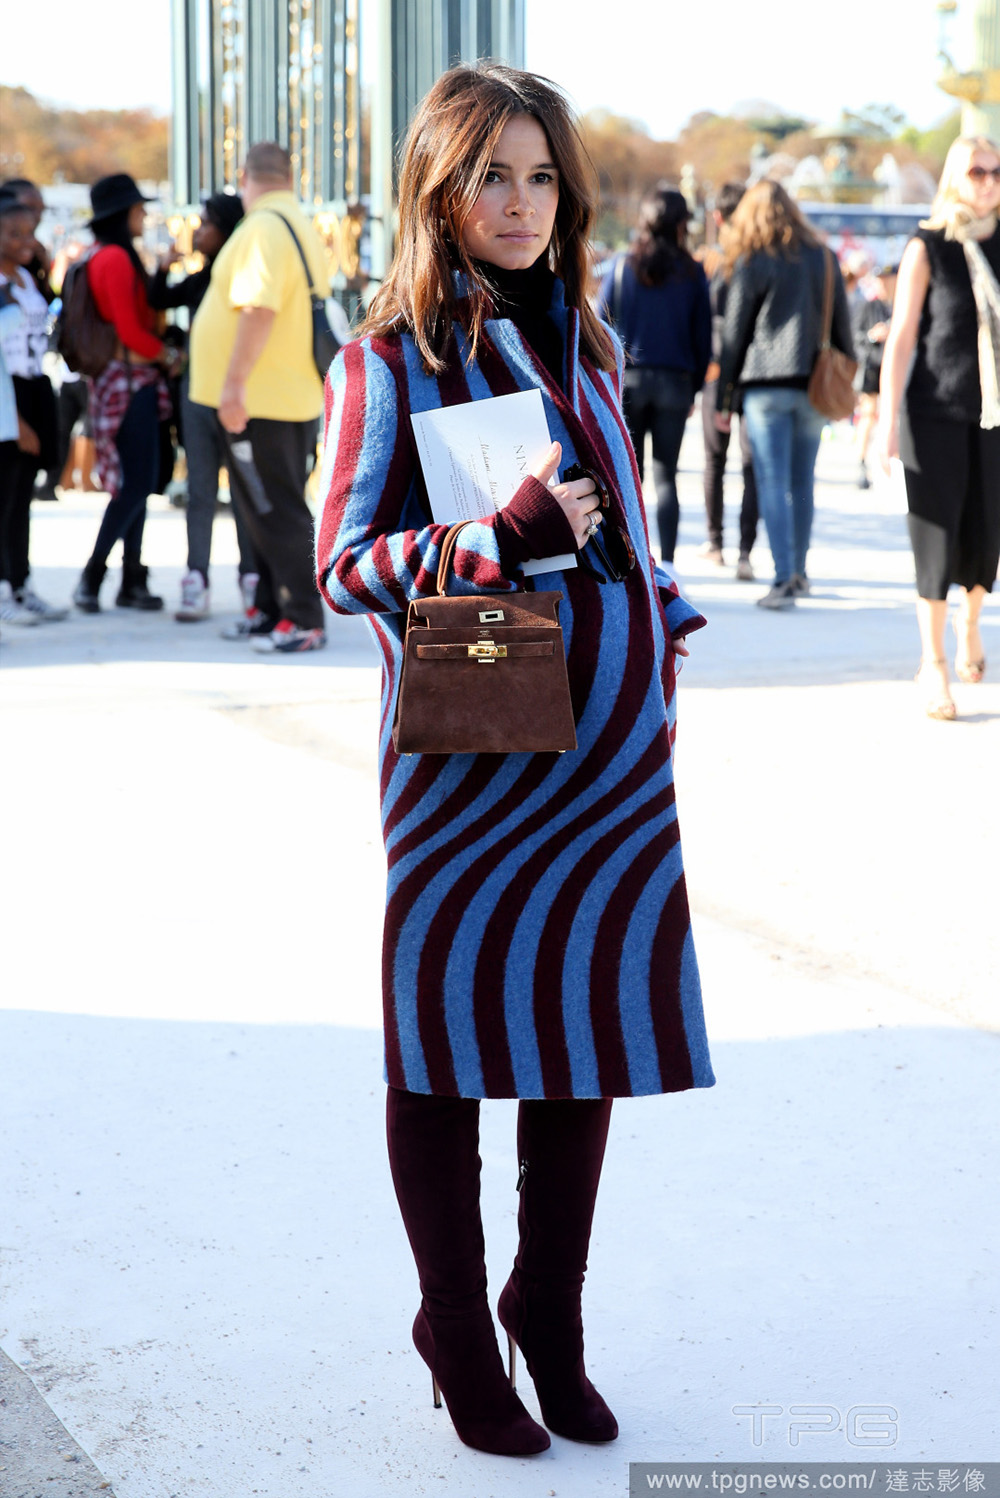 STREETSTYLE: Russian fashion blogger Miroslava Duma attends Nina Ricci Womenswear SS 2015 in Jardins Des Tuileries on September 25, 2014 in Paris, France